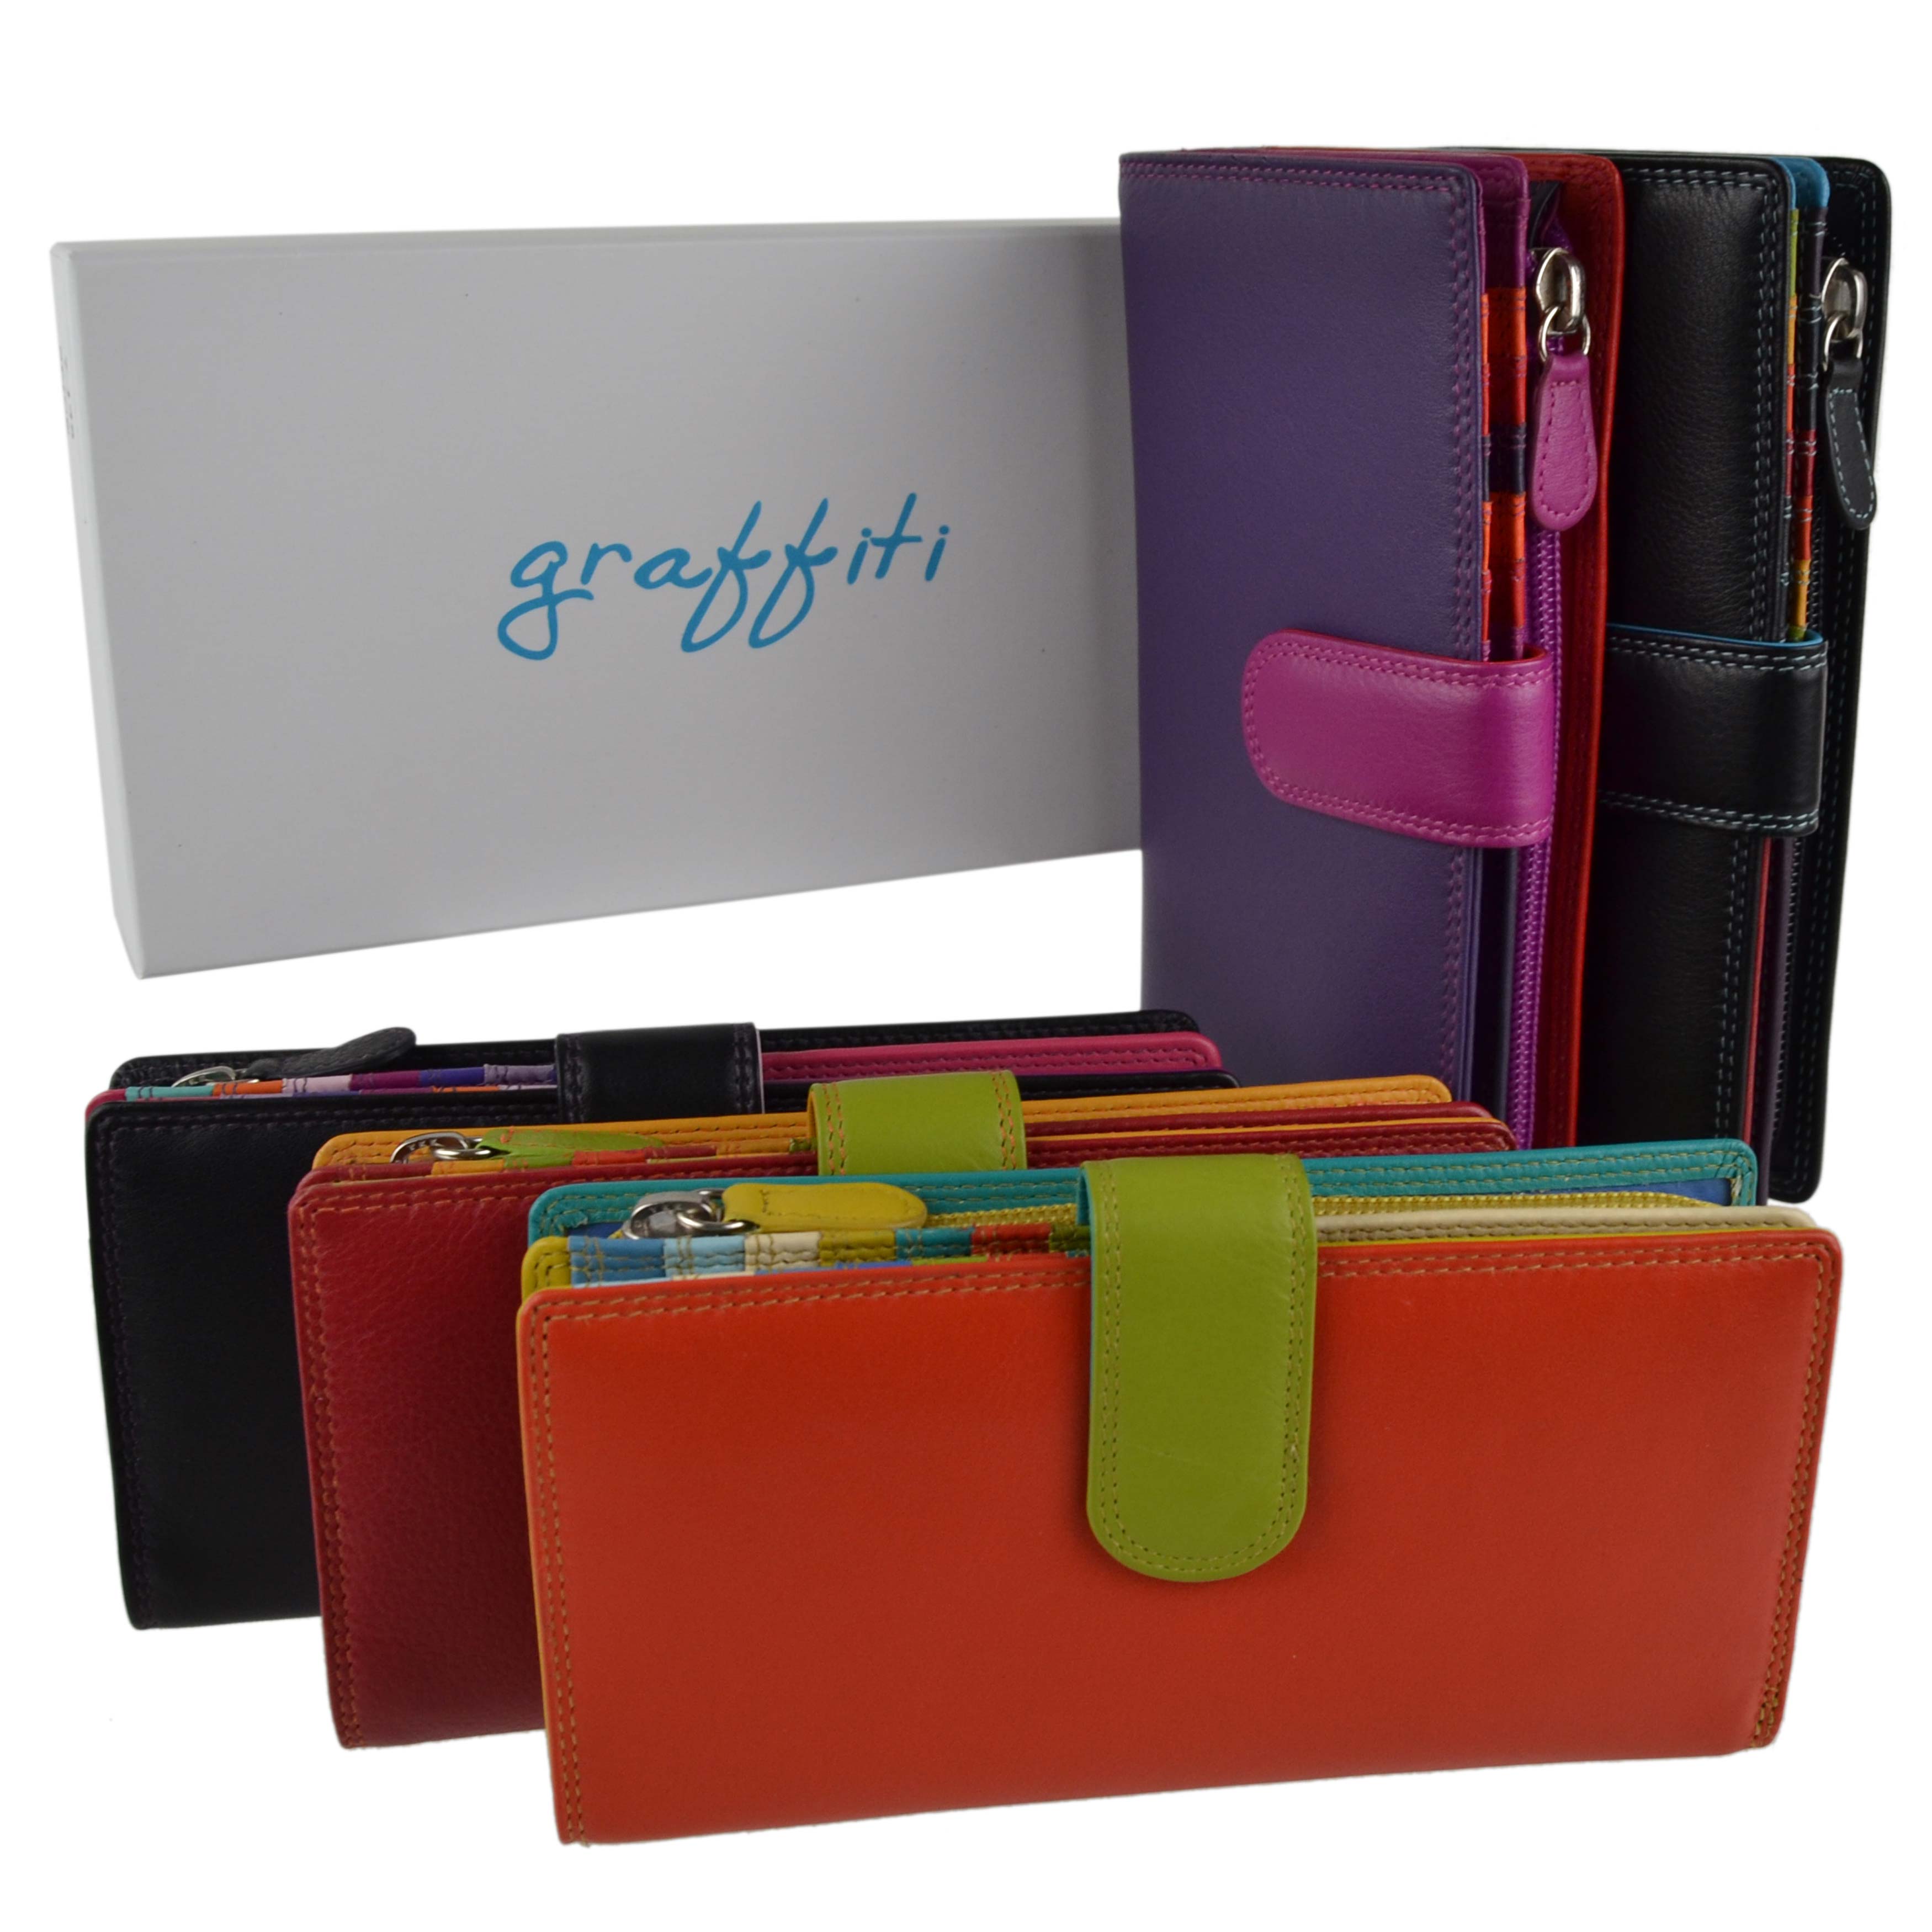 Ladies Leather Tabbed Purse/Wallet by Golunski; Graffiti Gift Box Bright Colours | eBay